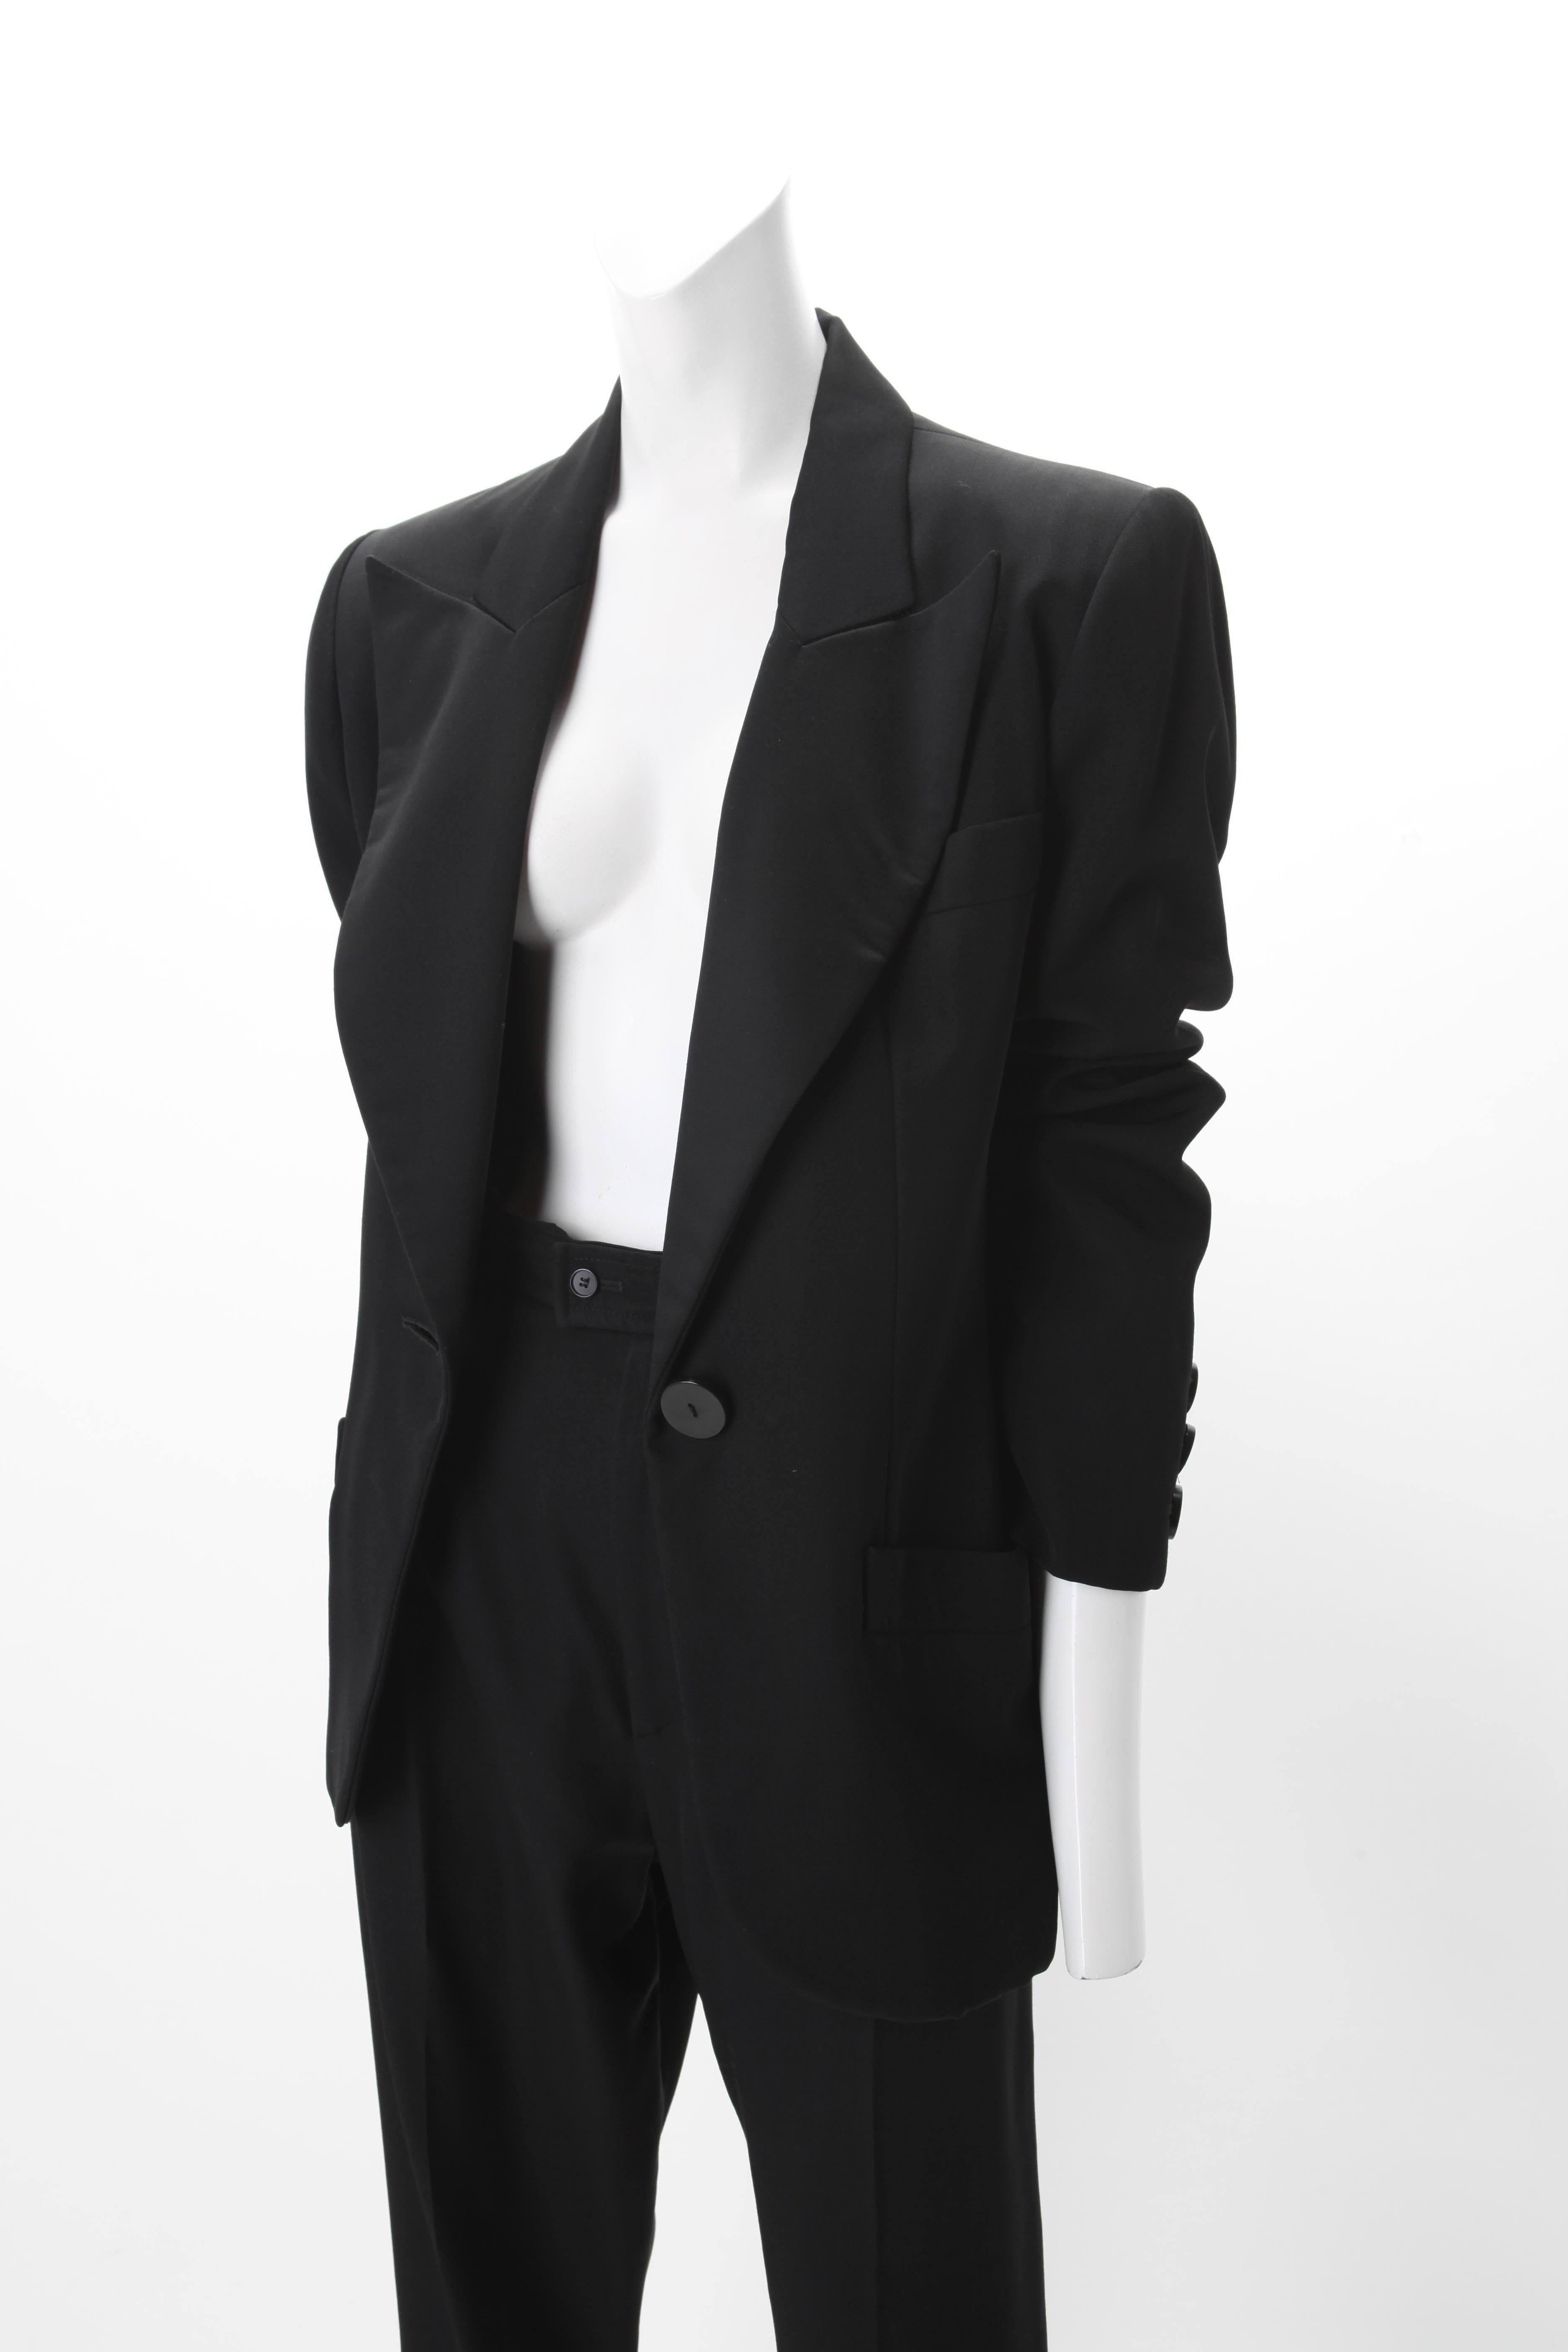 Yves Saint Laurent Rive Gauche Black Wool 2pc Le Smoking  Tuxedo EU sz 40

Trouser waist 30